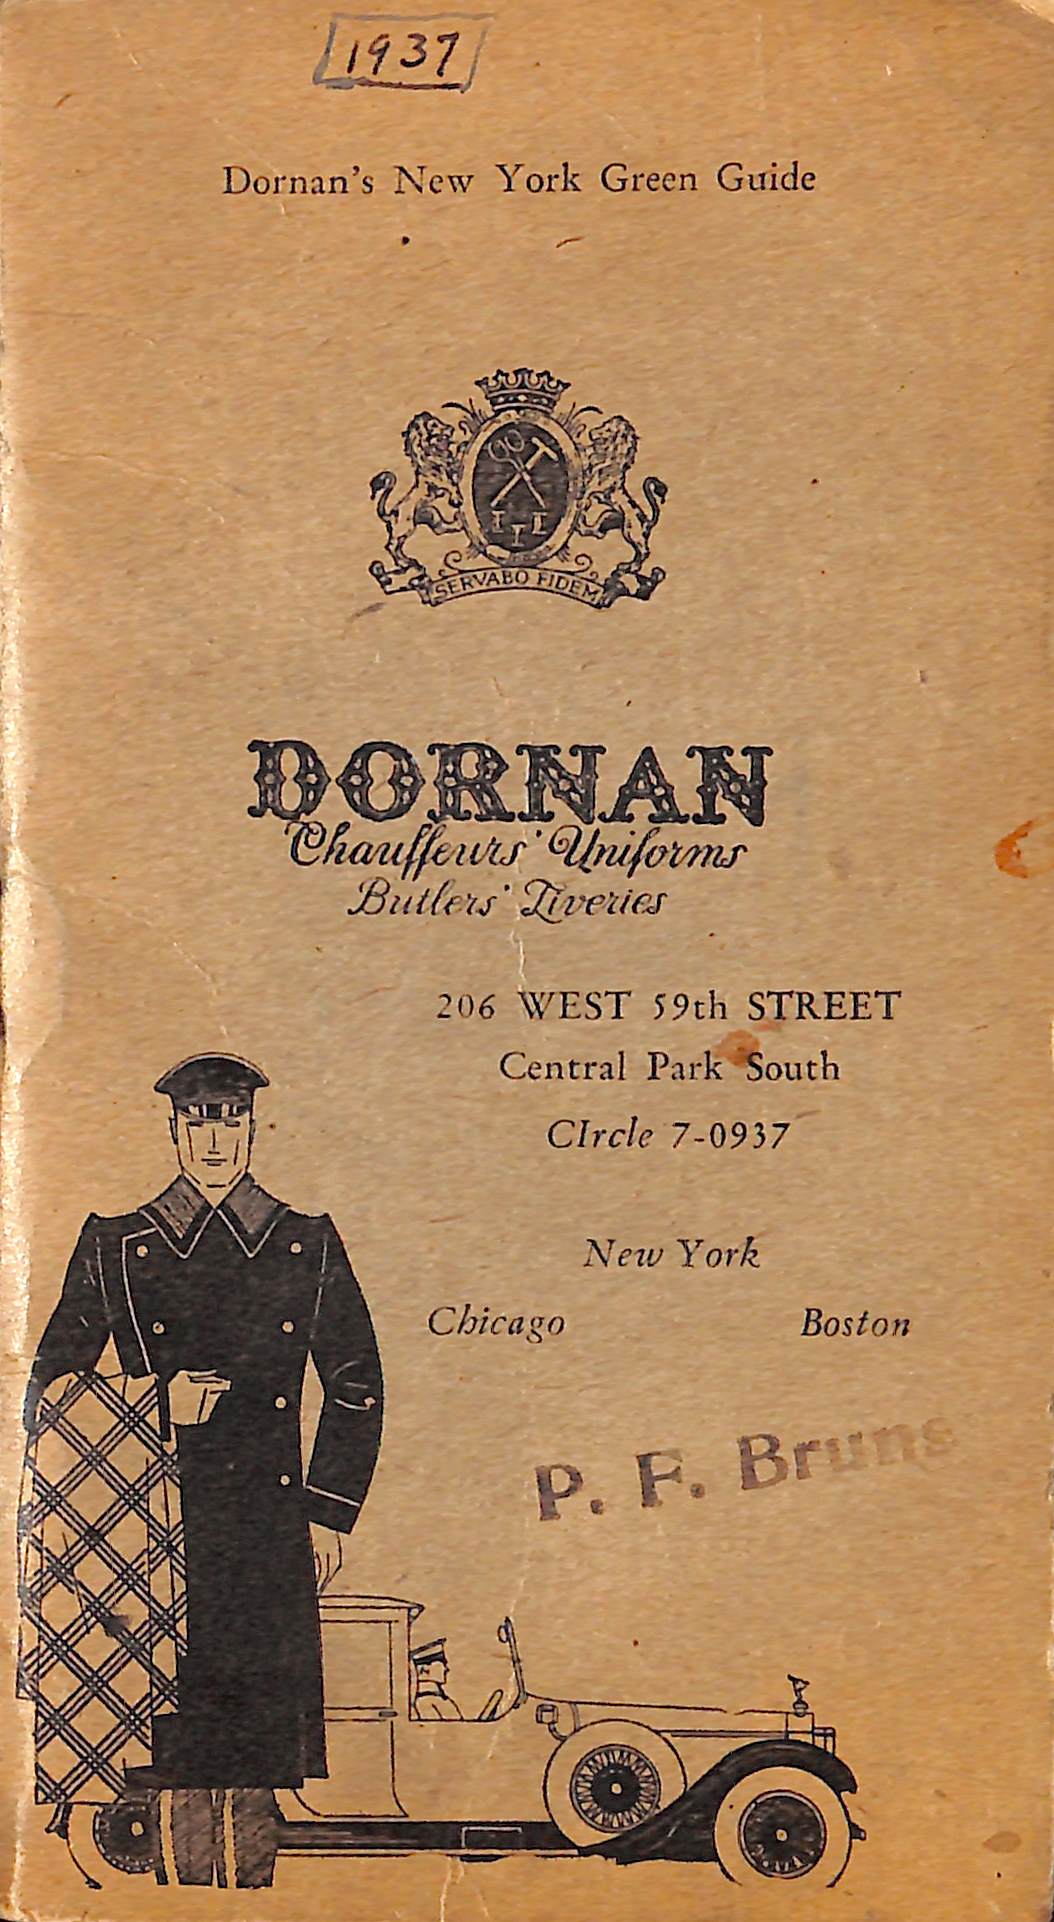 Dornan's New York Green Guide 1933